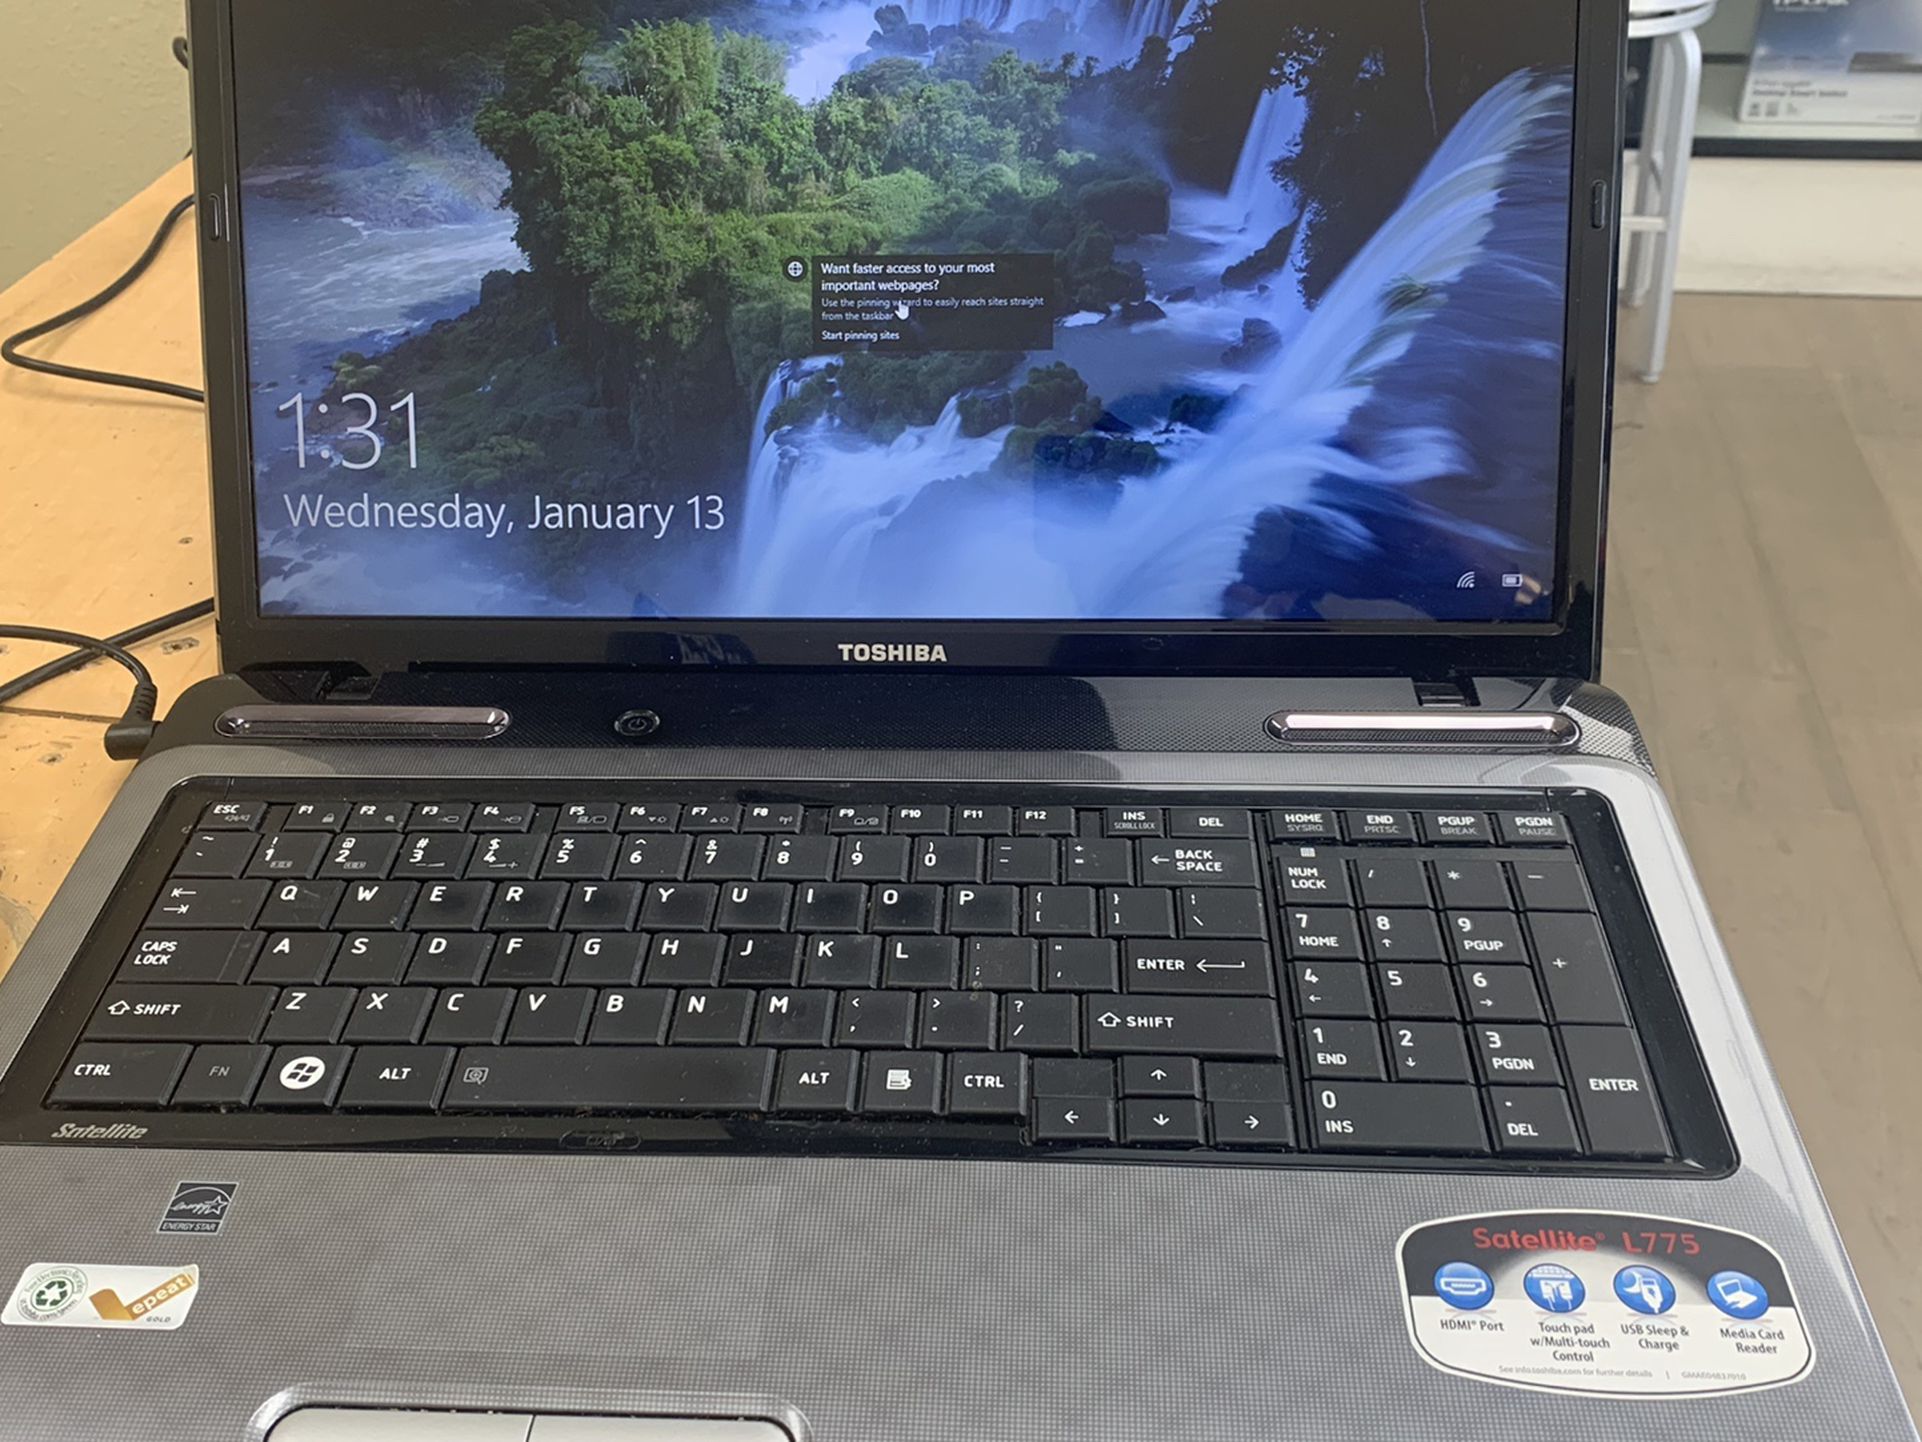 Toshiba Laptop 17” Windows 10